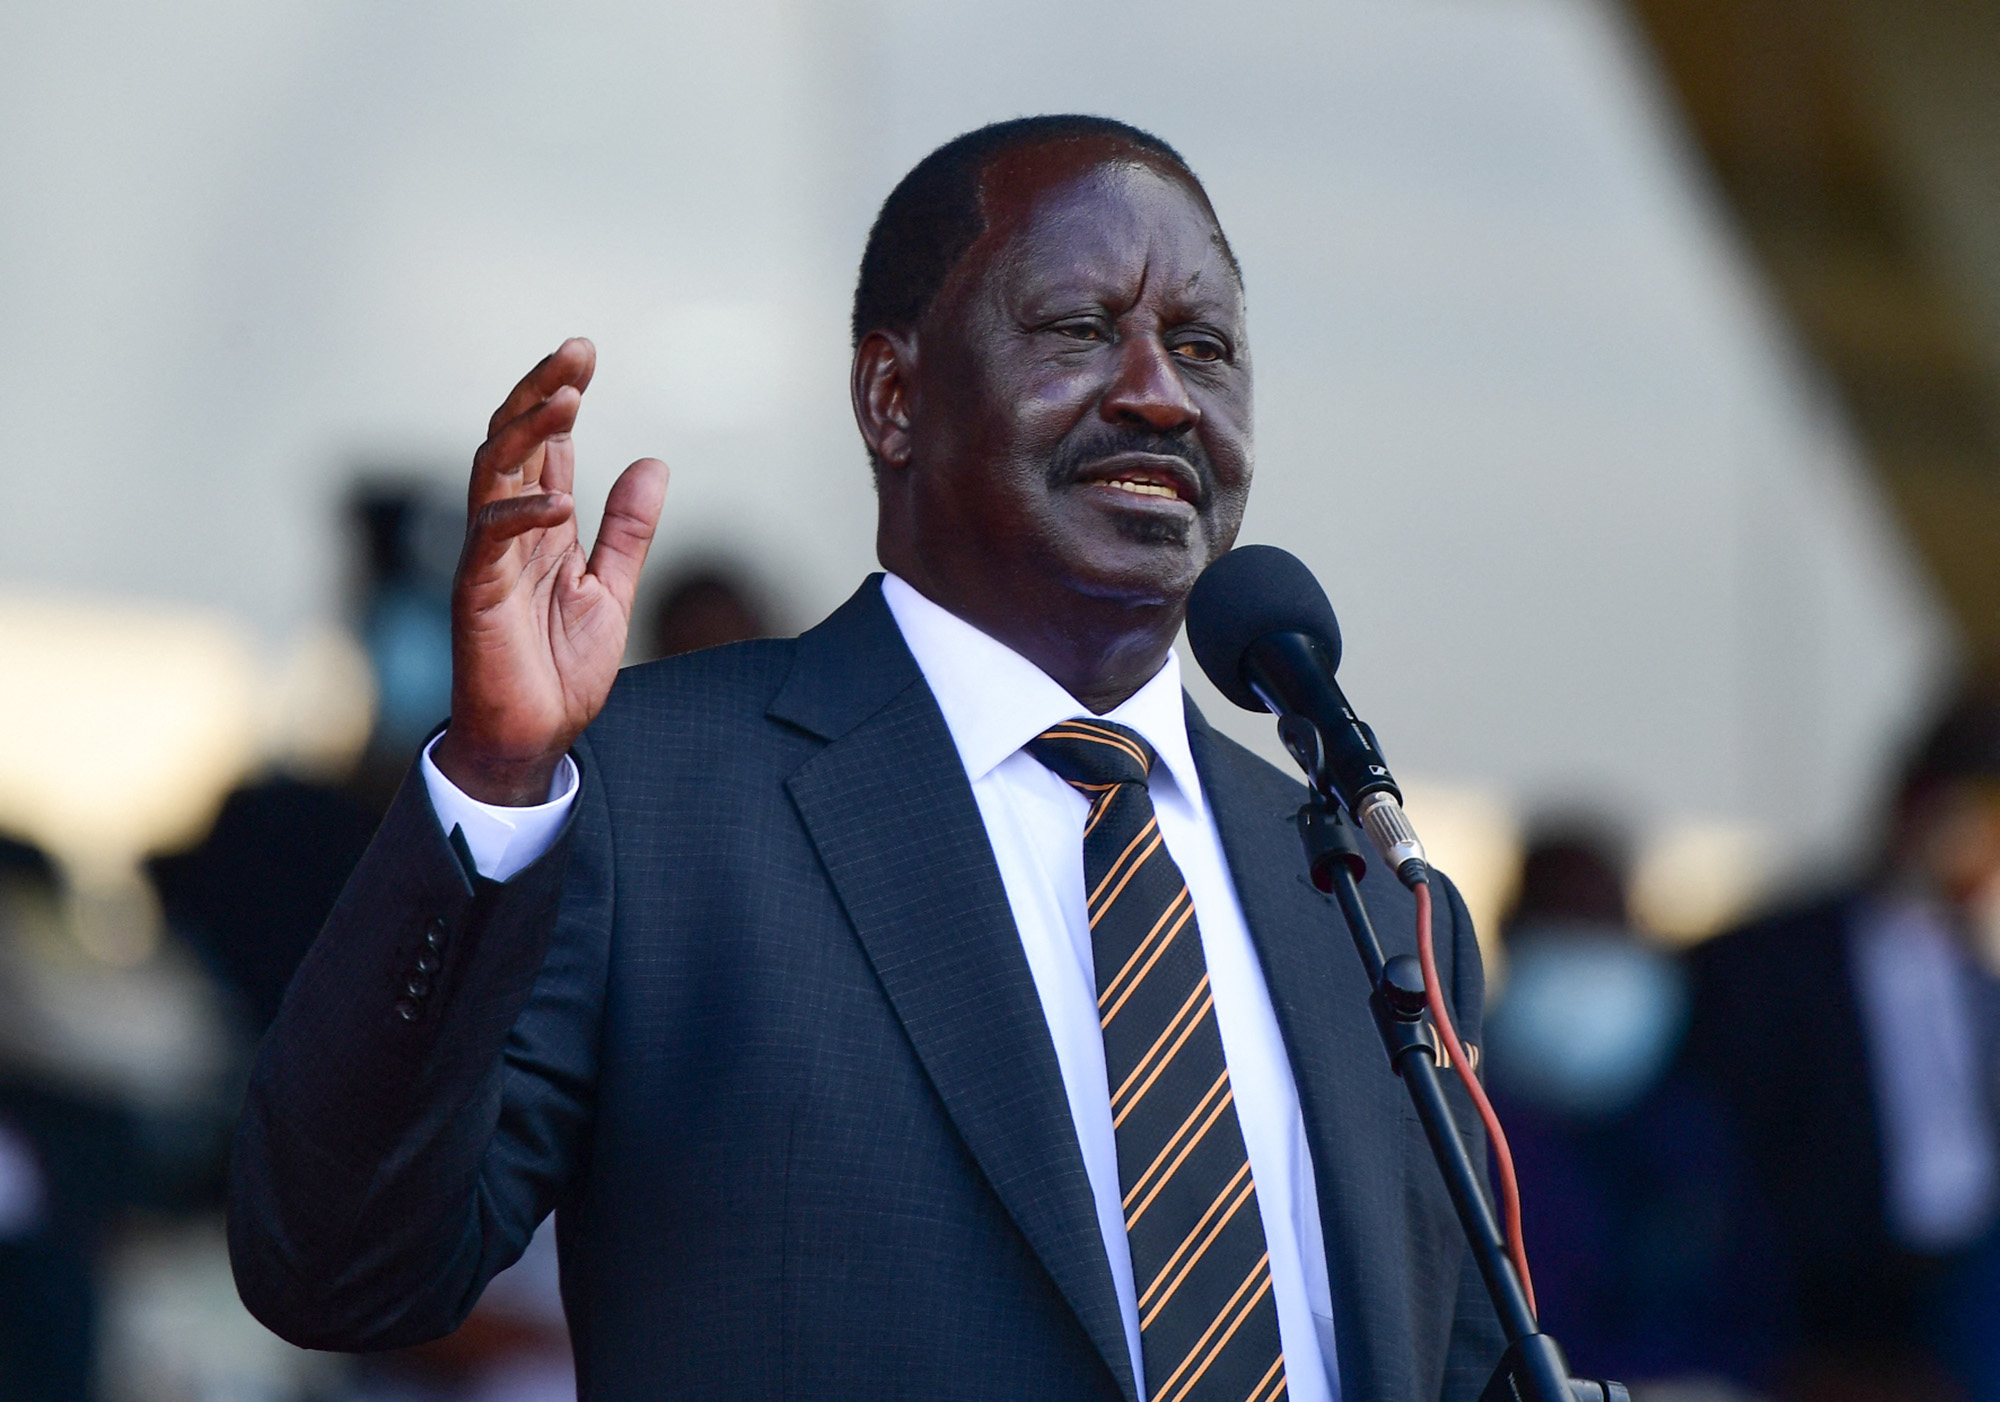 Kenya President Election Opinion Poll Shows Raila Odinga Ahead of William Ruto - Bloomberg